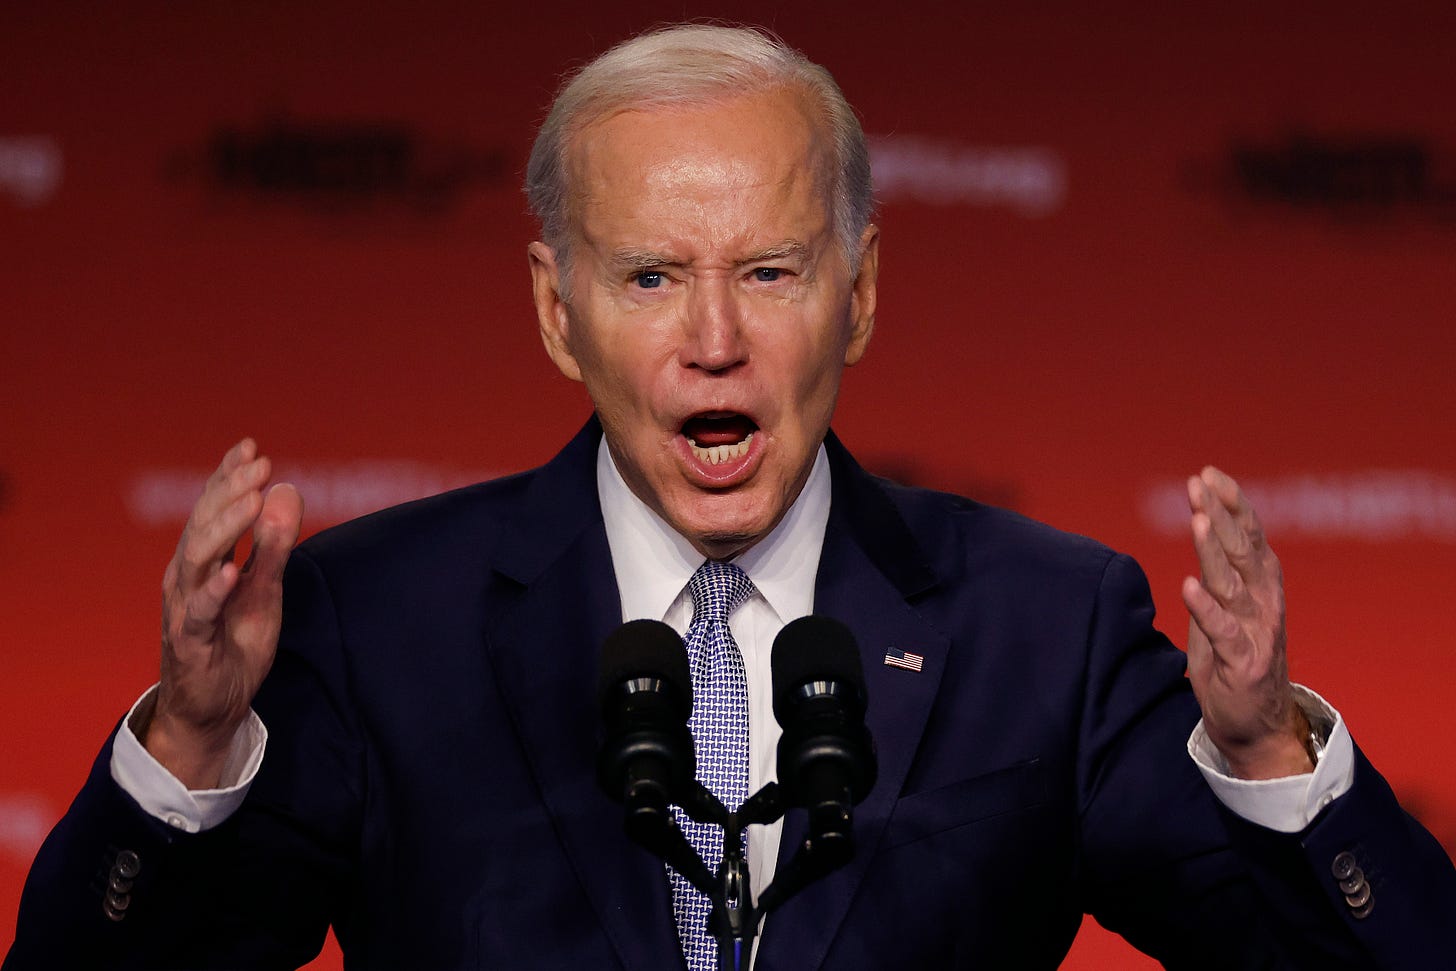 Report: President Biden has huge temper; yells, curses frequently